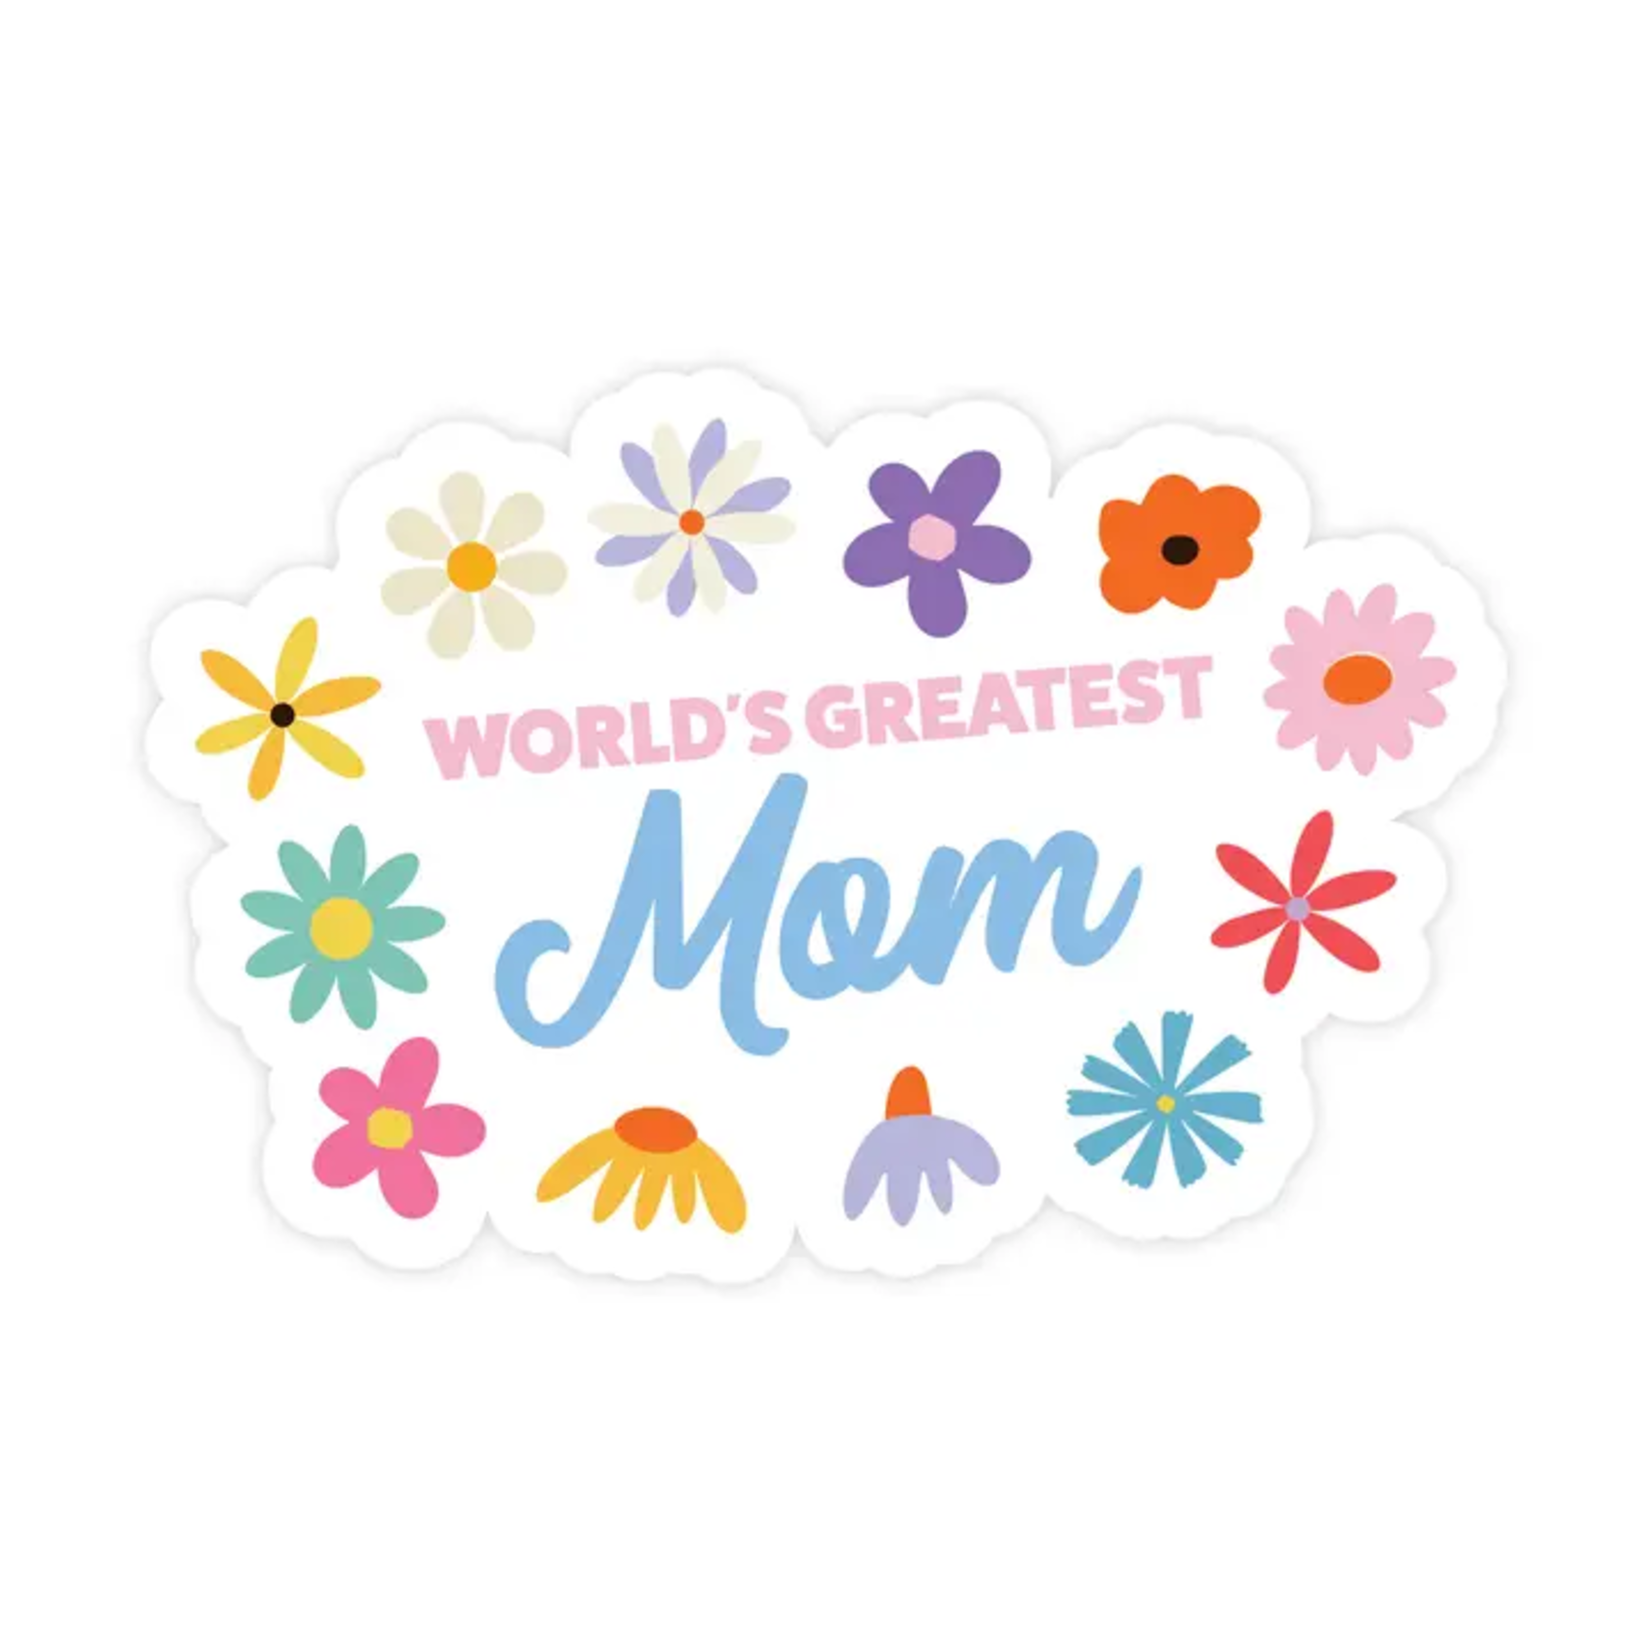 World's Greatest Mom Magnet